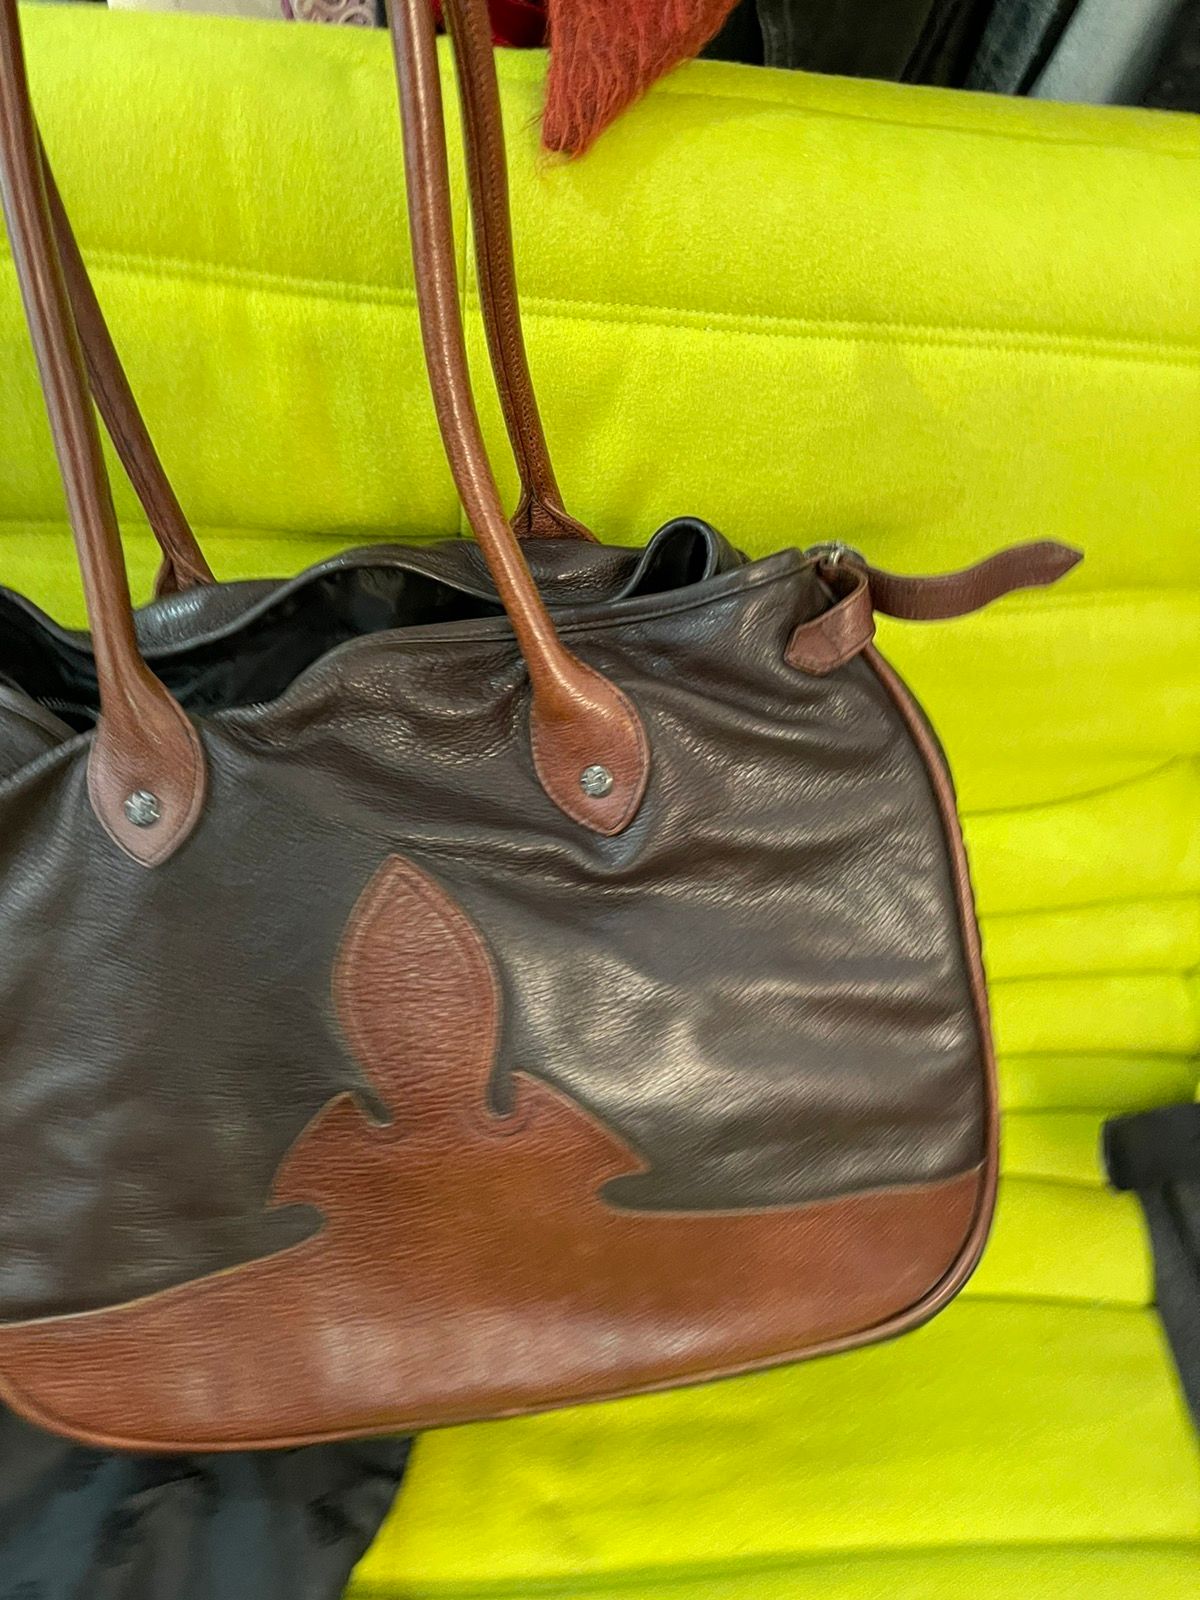 Chrome Hearts XL HUGE Travel Duffle Vacation Bag Luggage